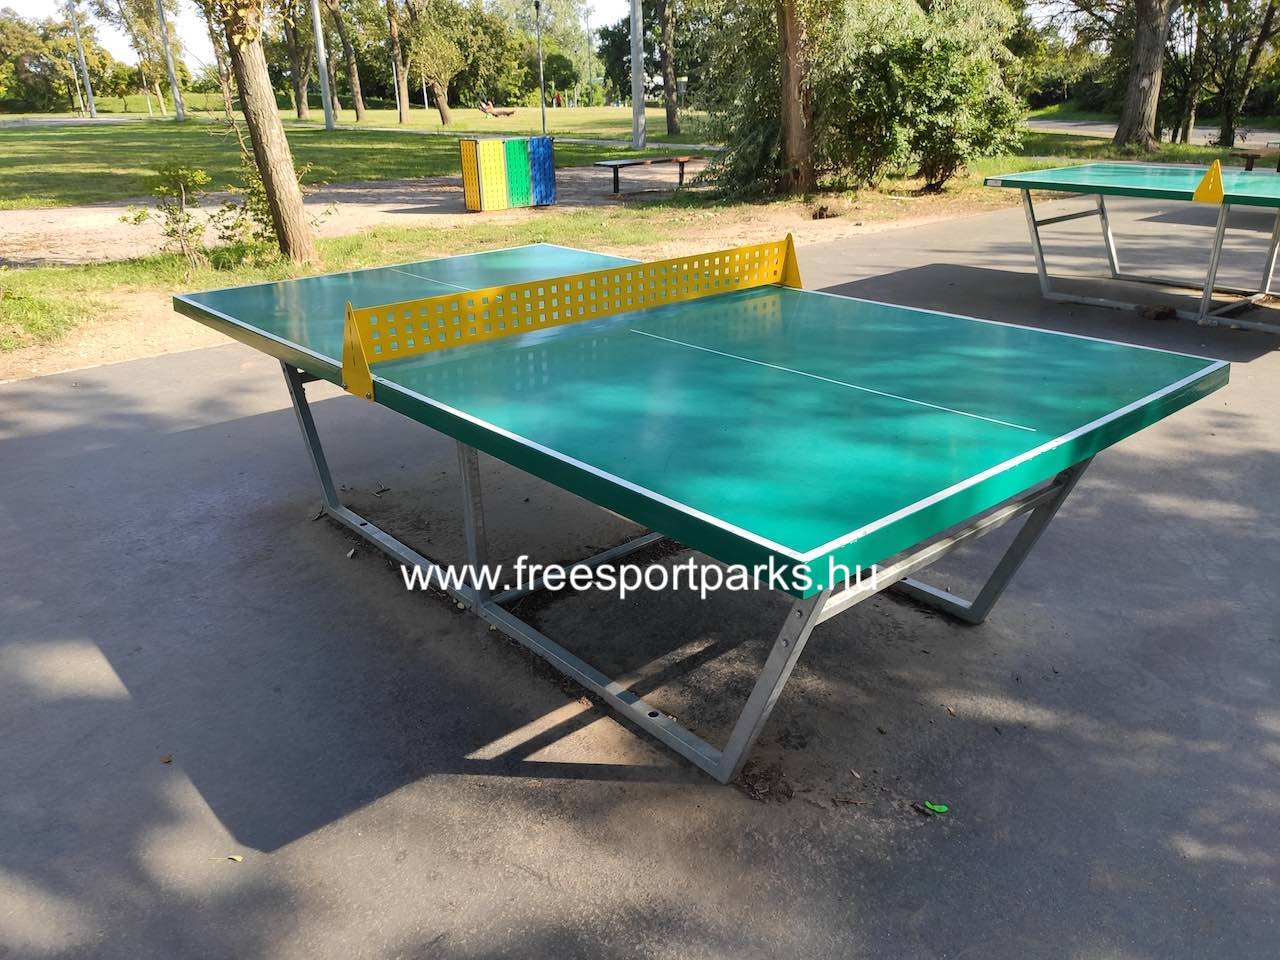 ping-pong pálya - Újhegy park Sportliget - Free Sport Parks térkép